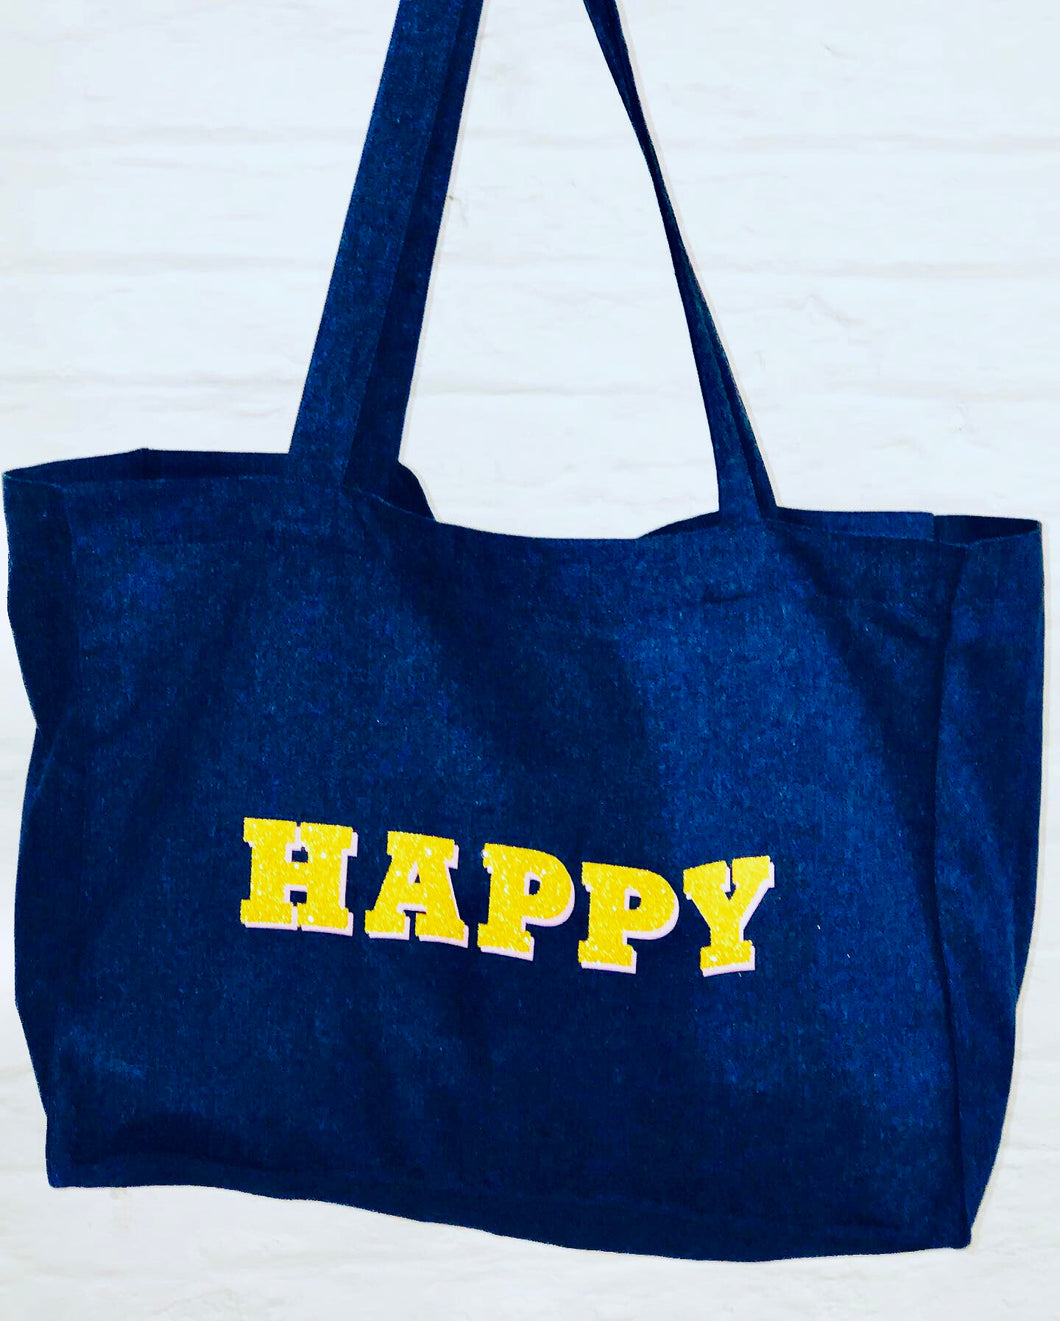 The Happy Bag